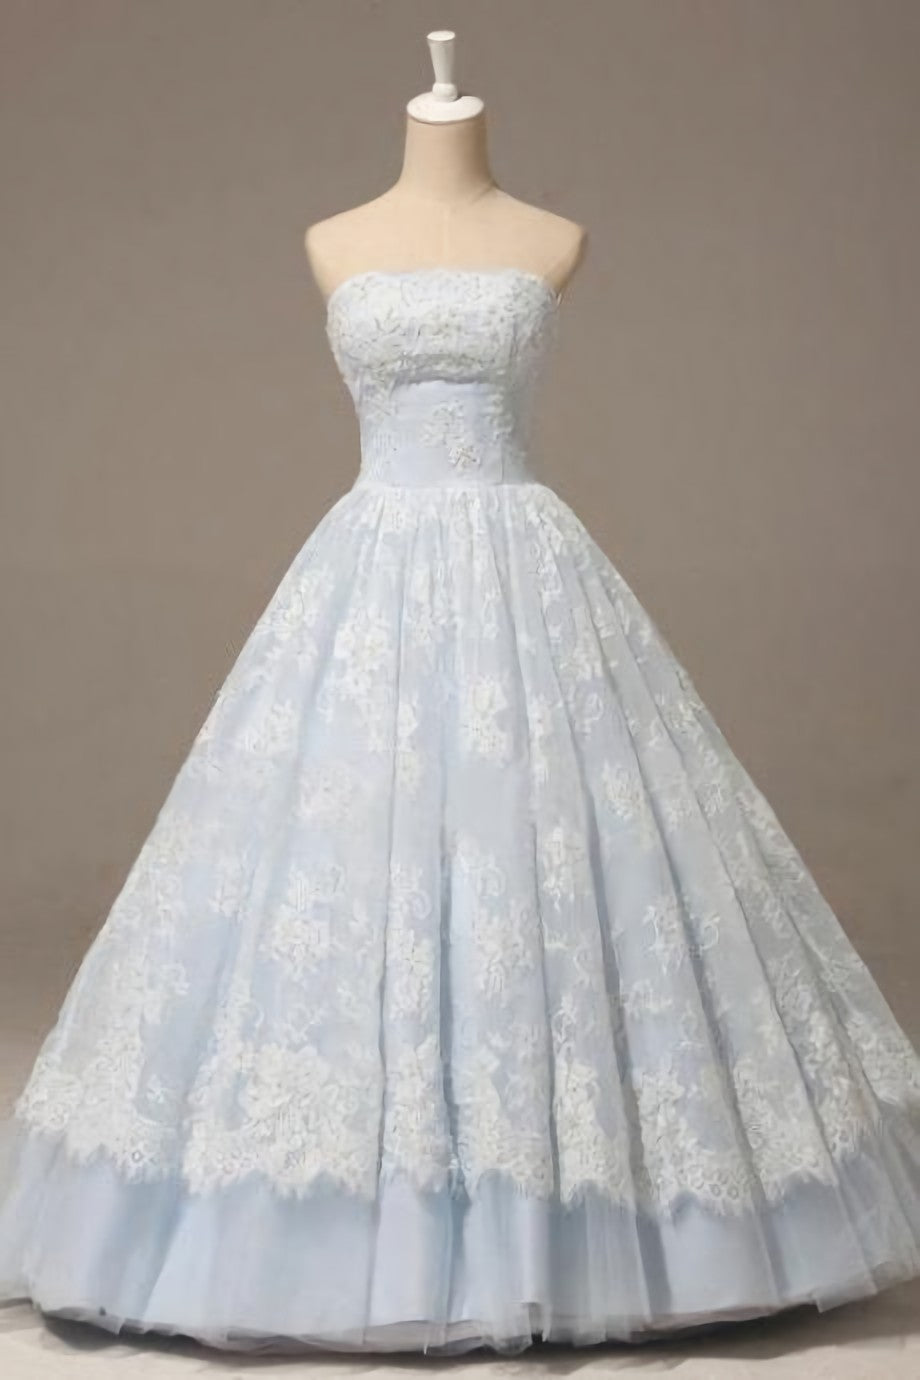 Prom Dresses Sweetheart, Light Blue Organza Lace Sweetheart A Line Long Prom Dress, Princess Ball Gown Dress